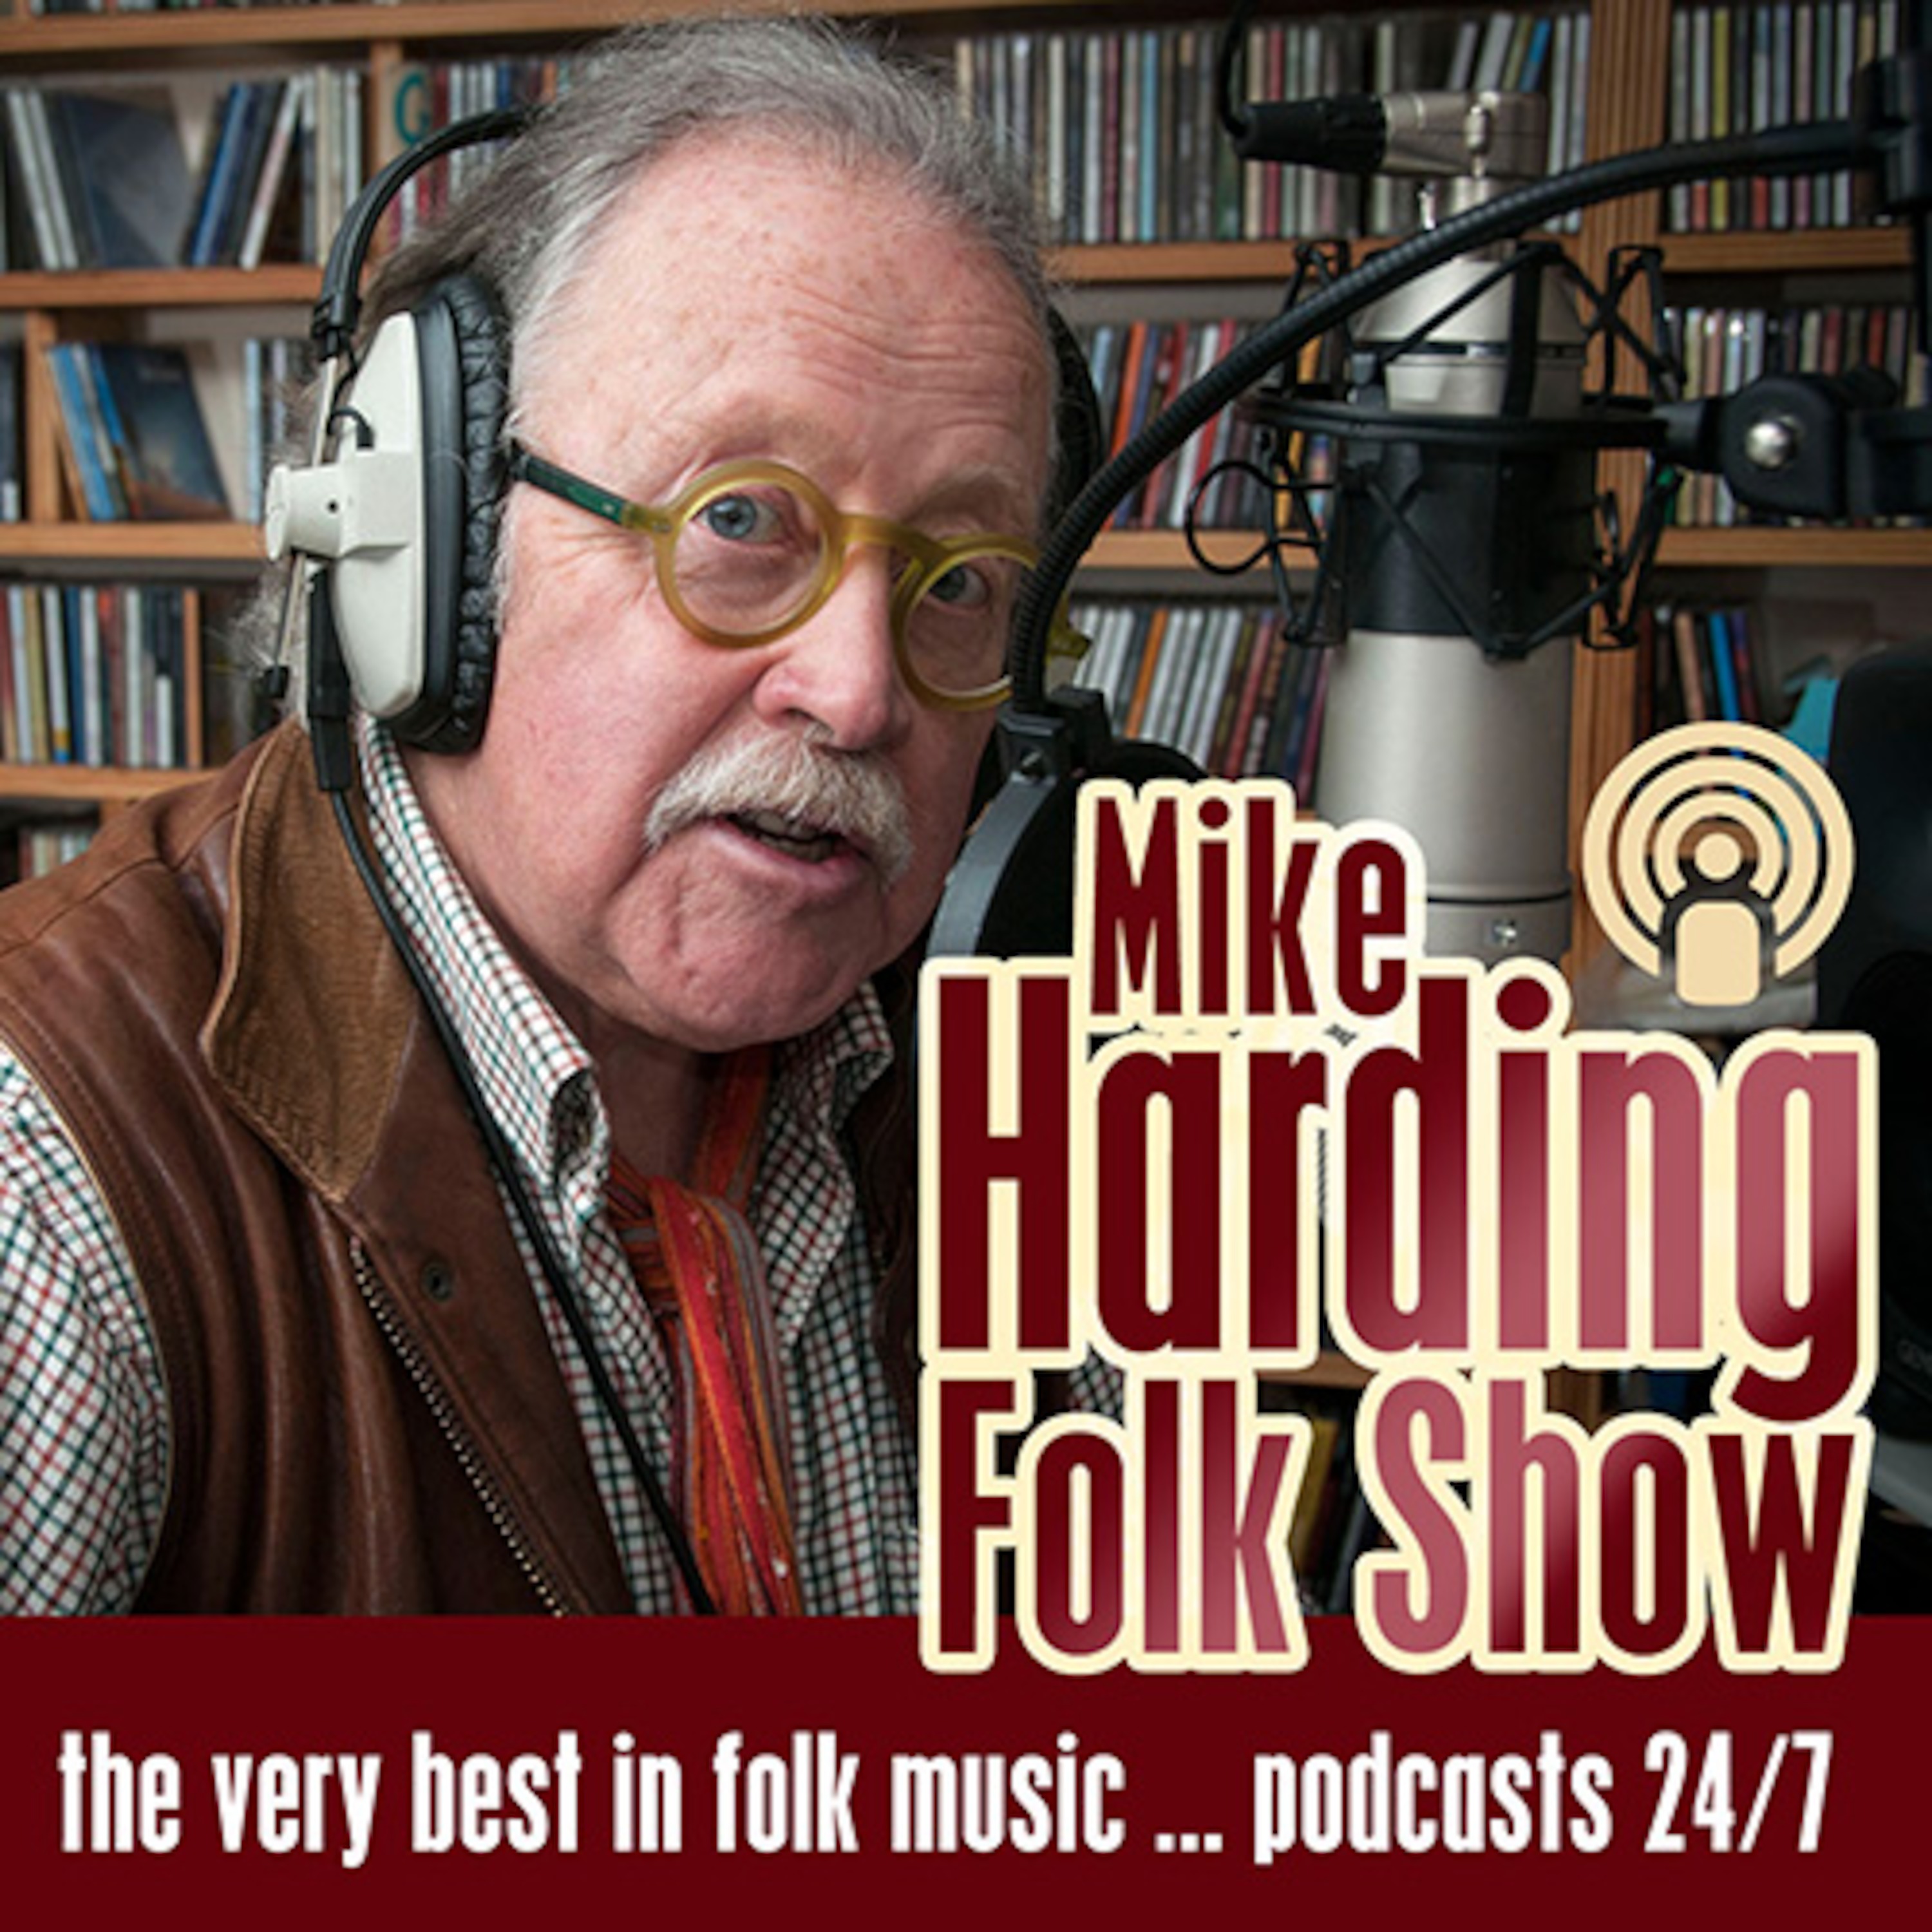 Mike Harding Folk Show 189